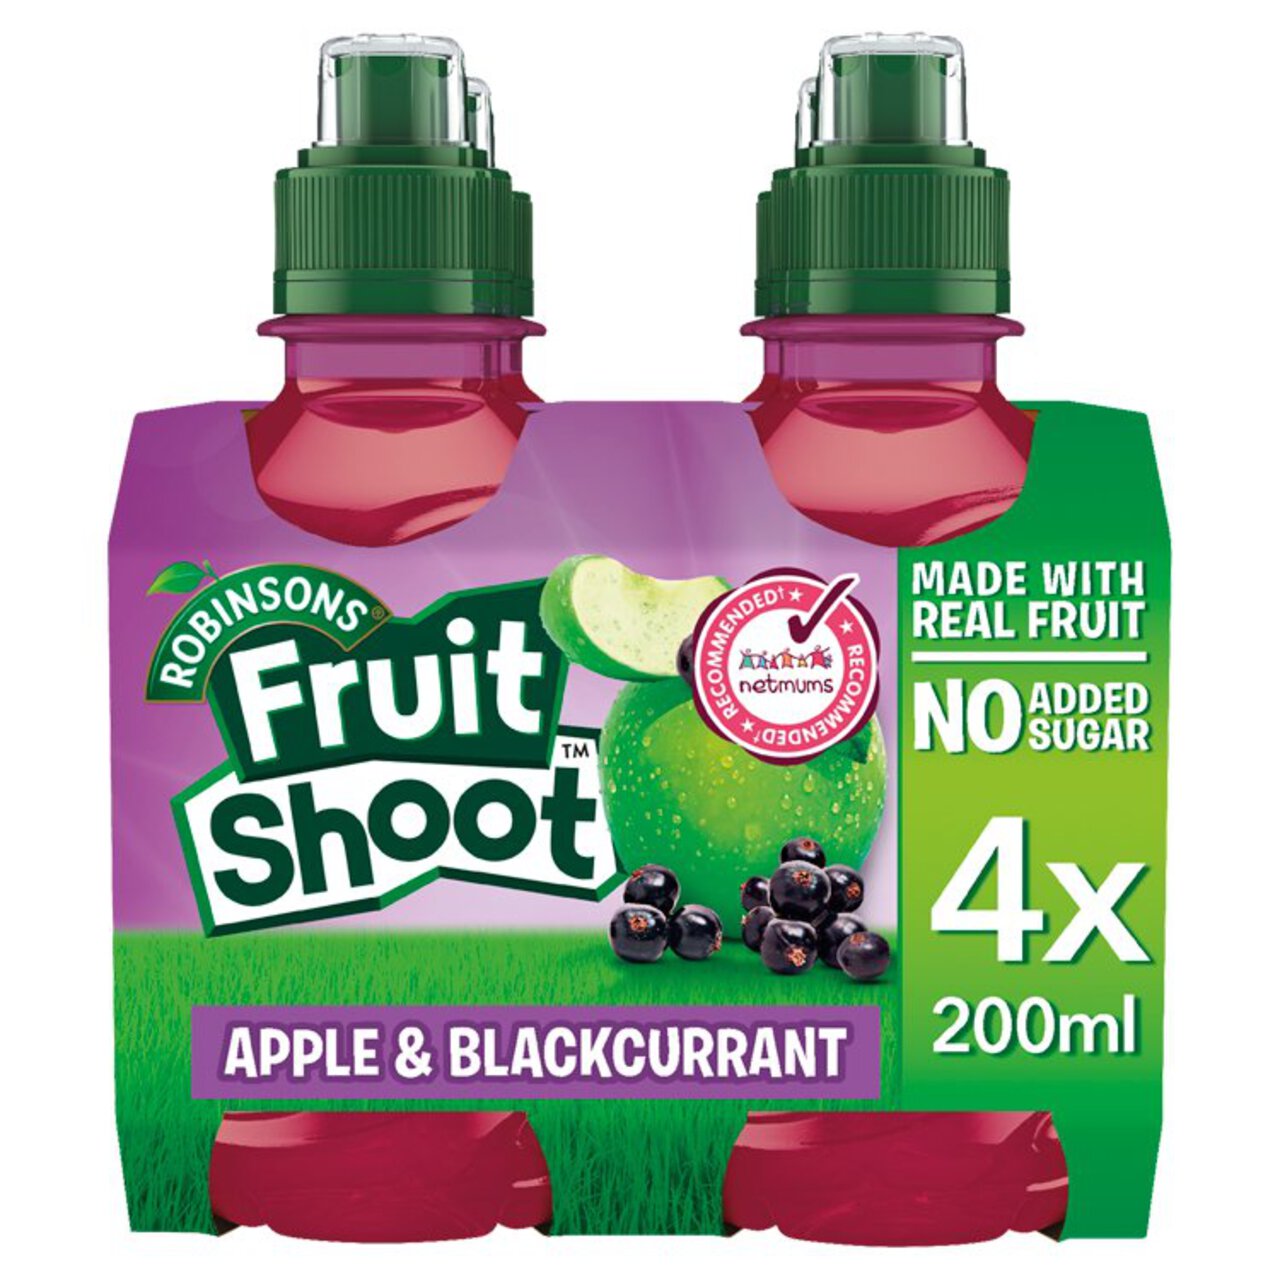 Fruit Shoot Apple & Blackcurrant No Added Sugar 4 x 200ml